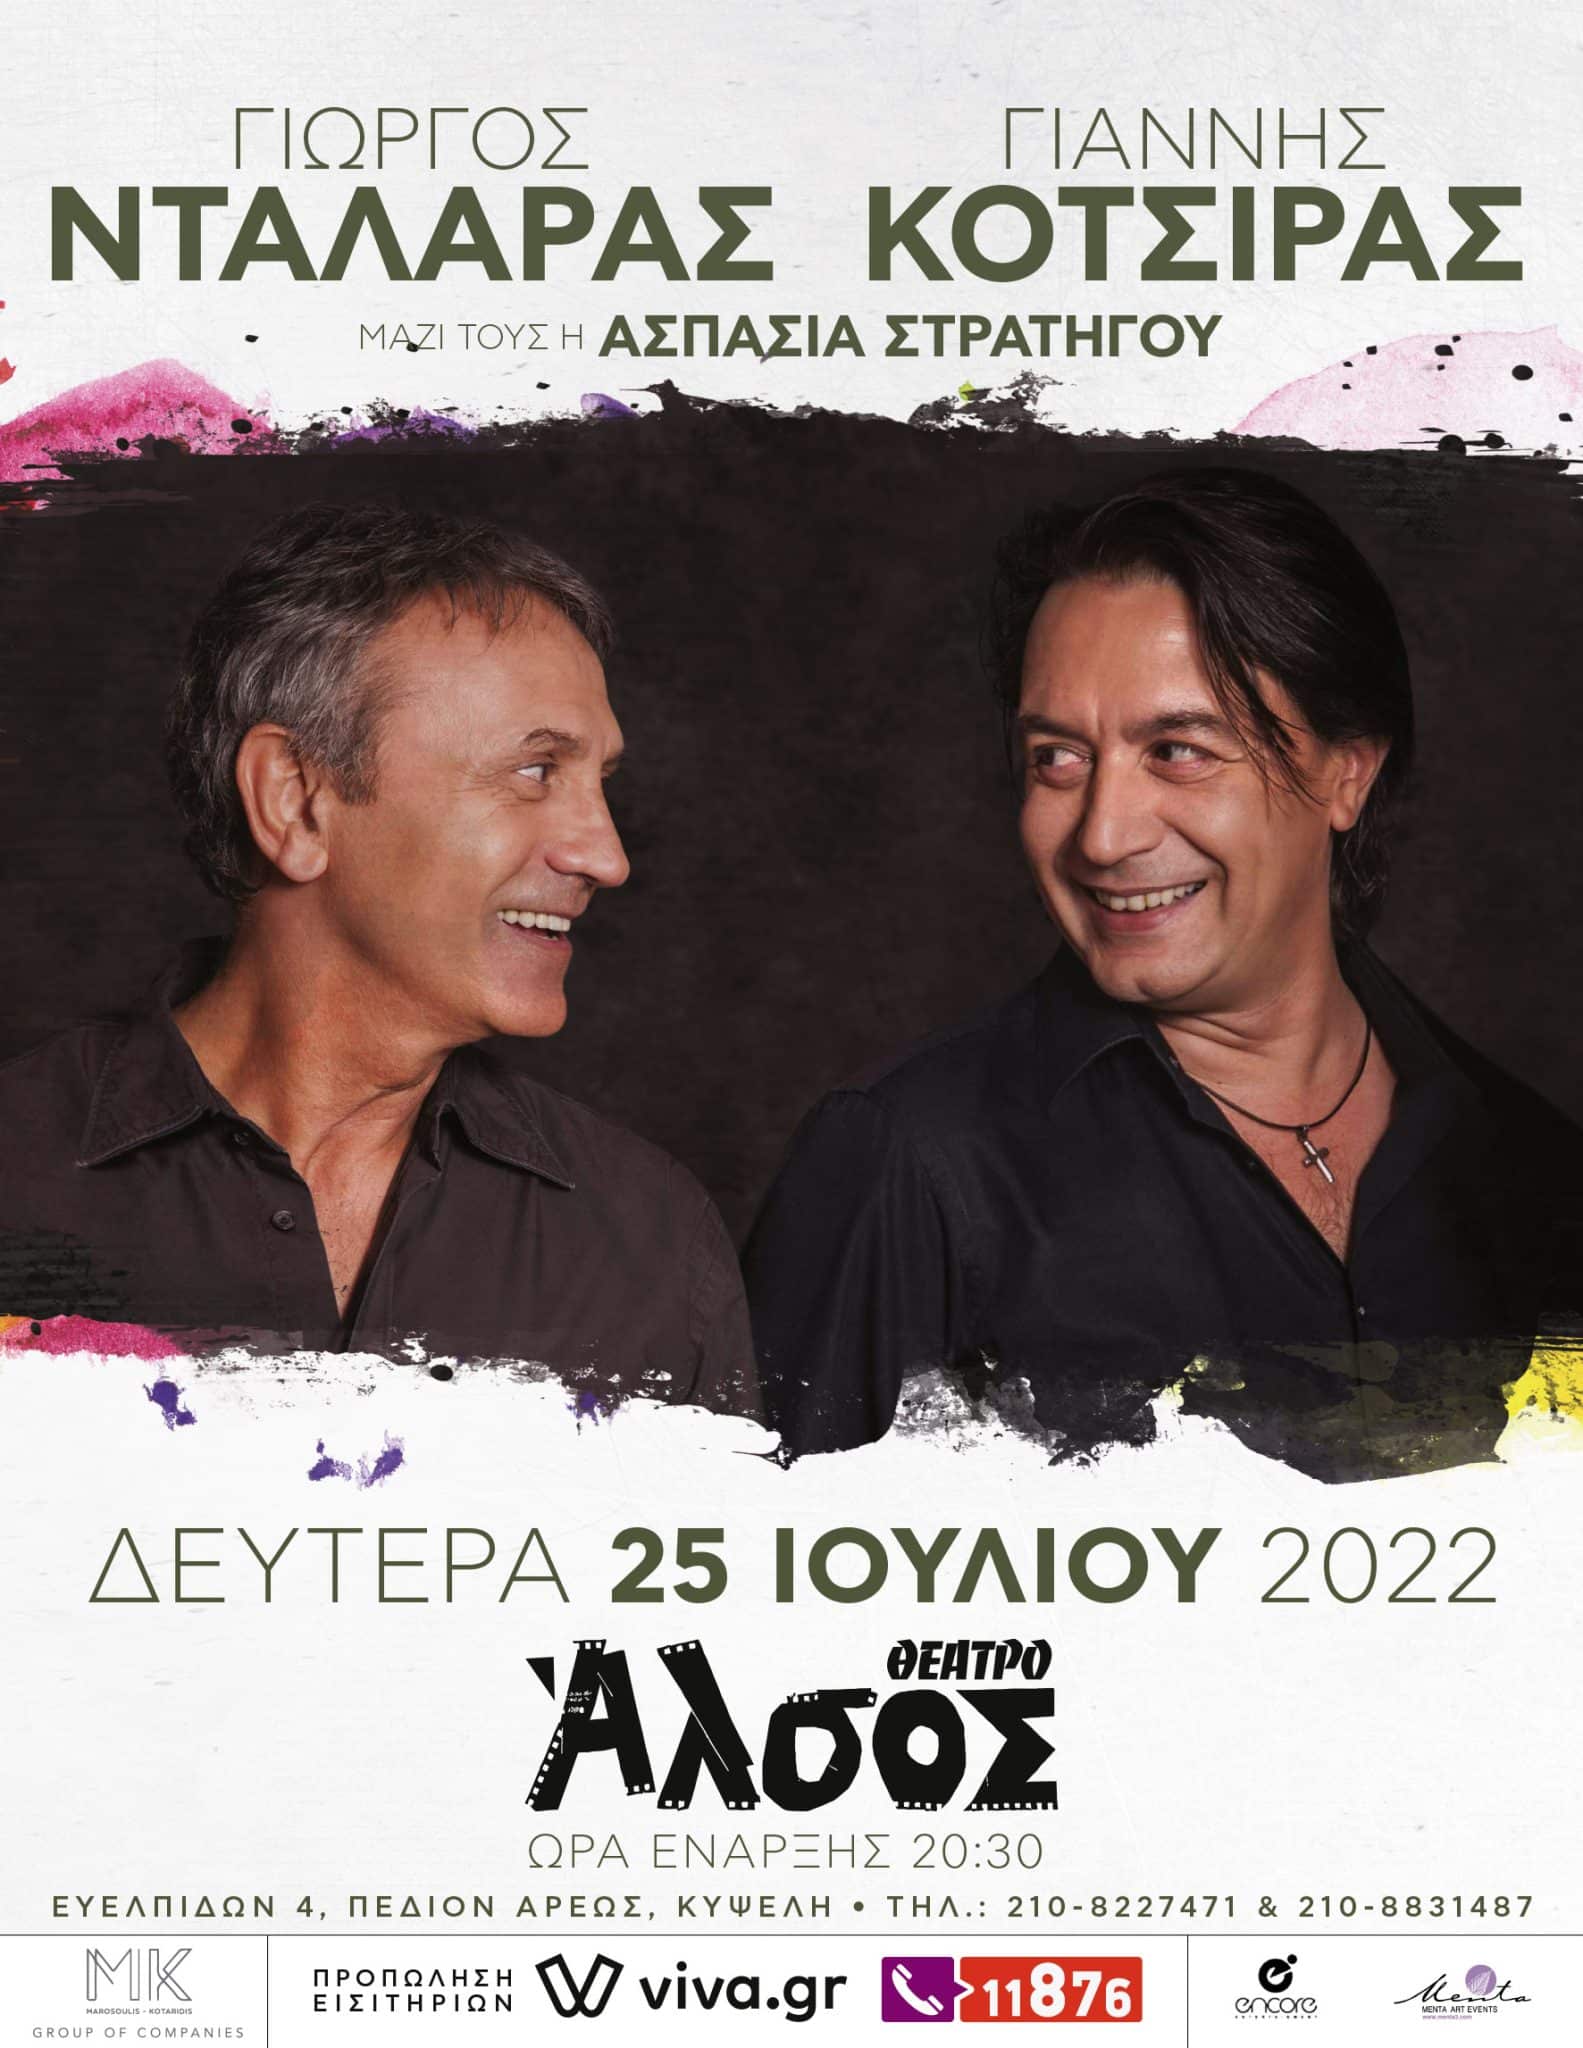 Ntalaras Kotsiras Alsos DT scaled - Γιώργος Νταλάρας - Γιάννης Κότσιρας στο Θέατρο Άλσος τη Δευτέρα 25 Ιουλίου